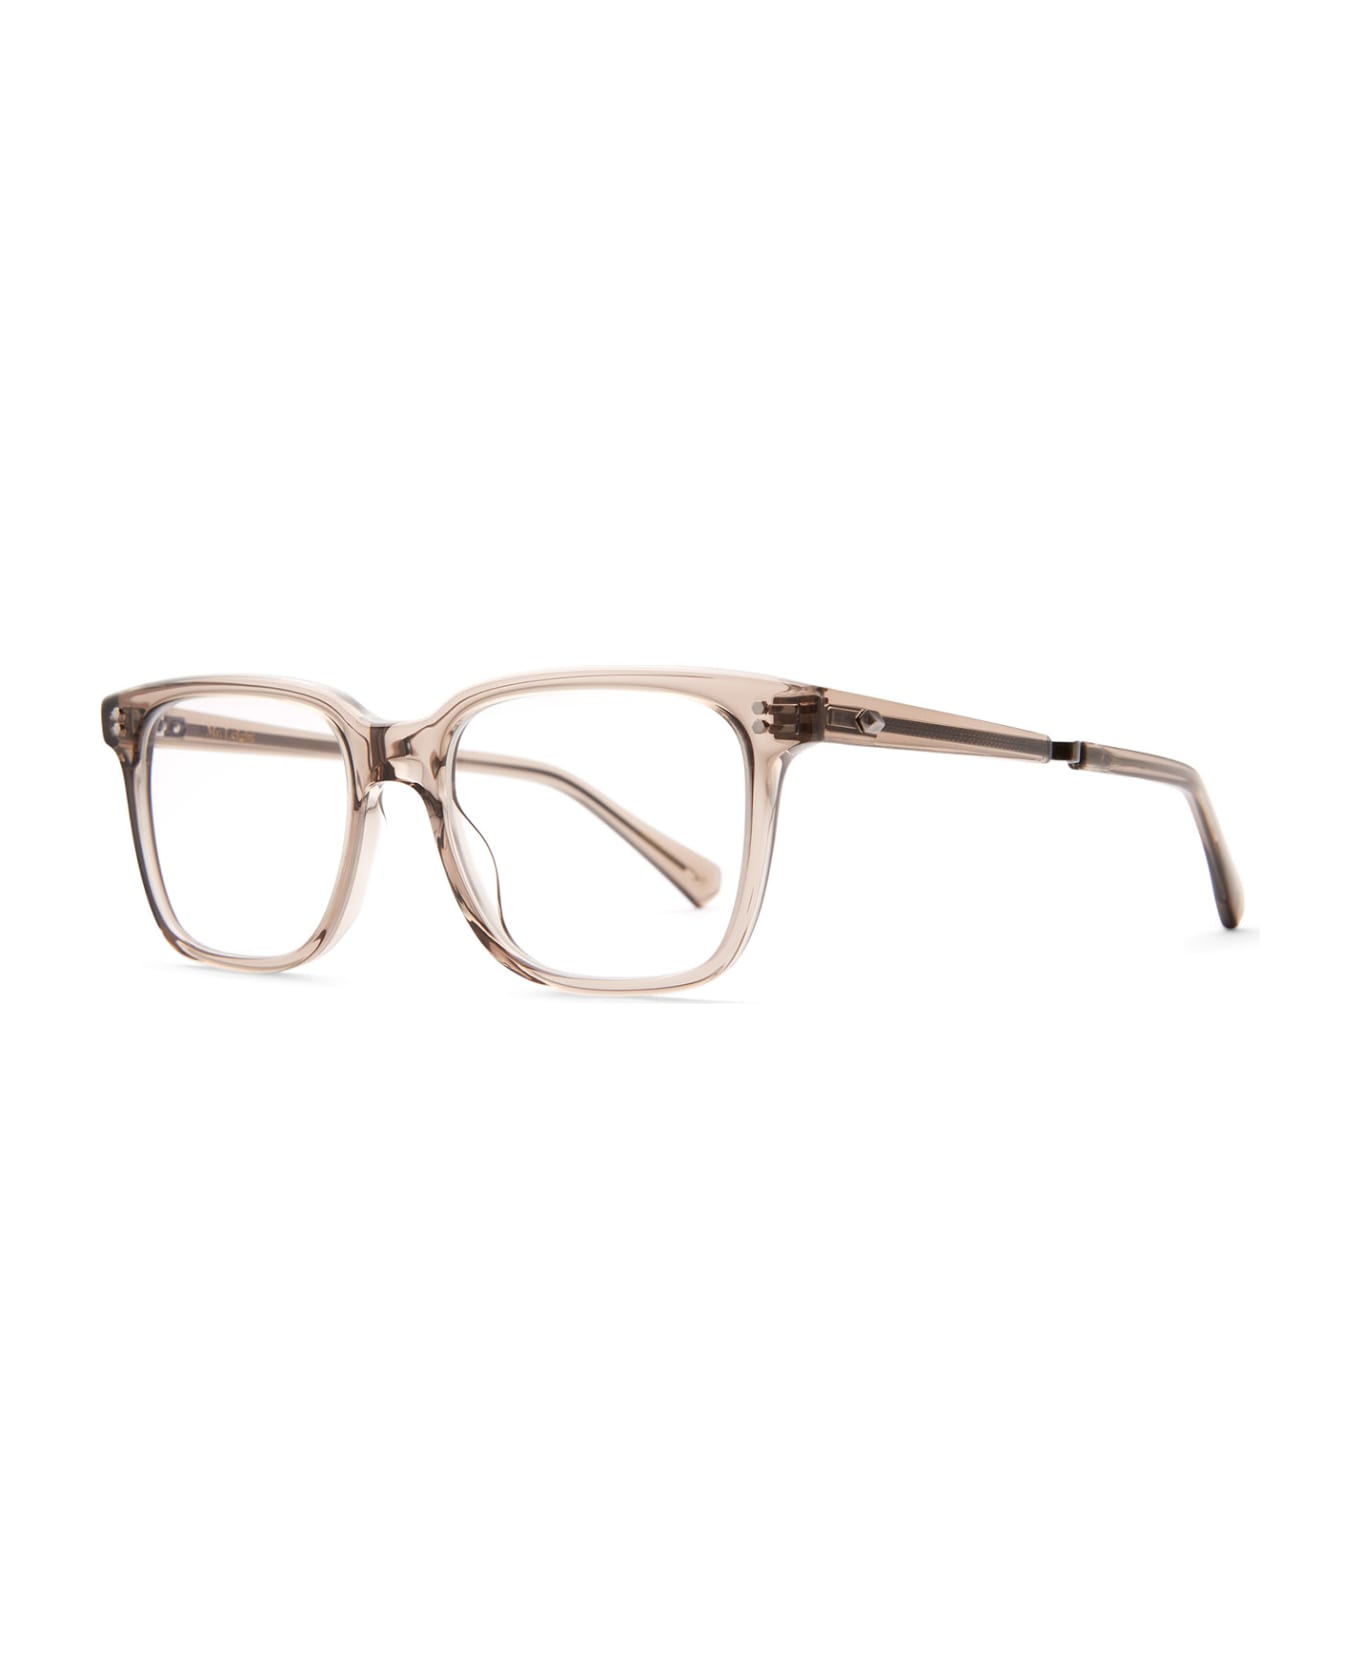 Mr. Leight Lautner C Grey Crystal-pewter Glasses - Grey Crystal-Pewter